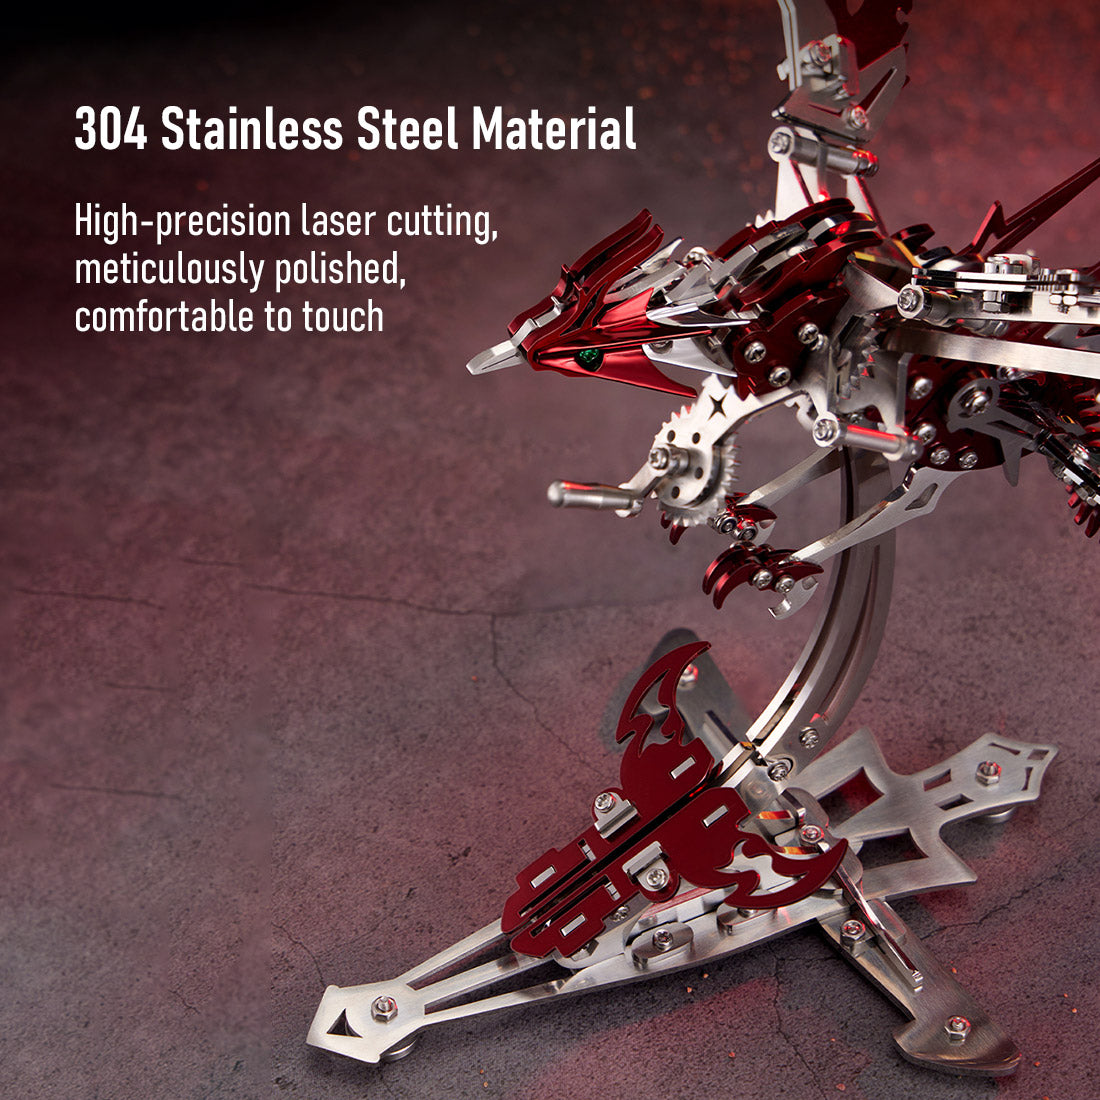 Mechanical Phoenix DIY Assembly 3D Metal Puzzle Model Kits 358PCS